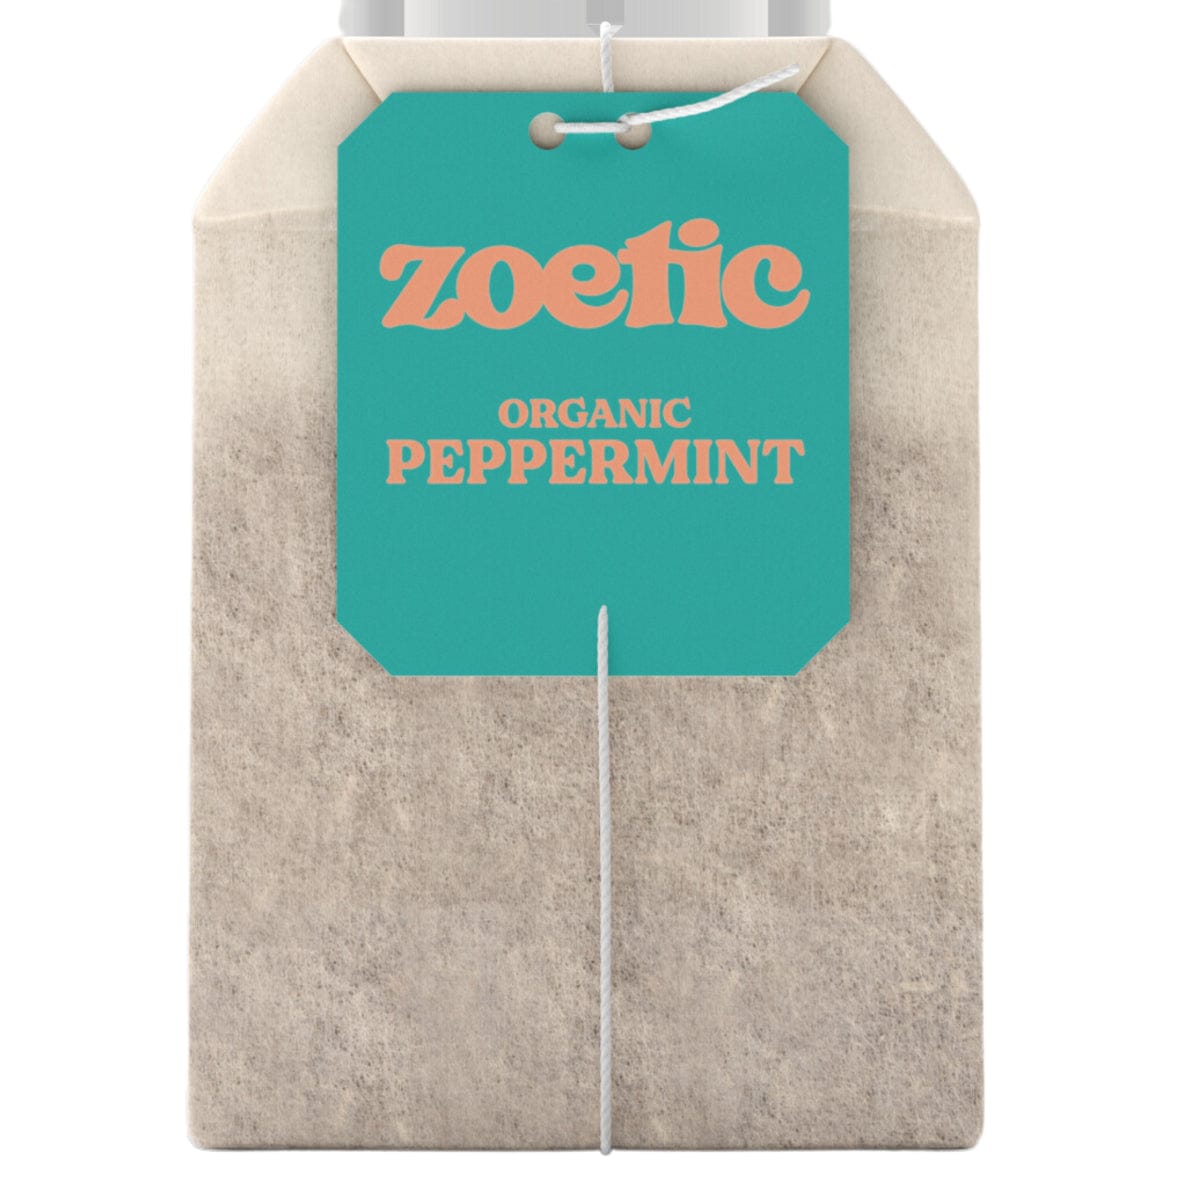 Zoetic Organic Peppermint - 25 Tea Bags